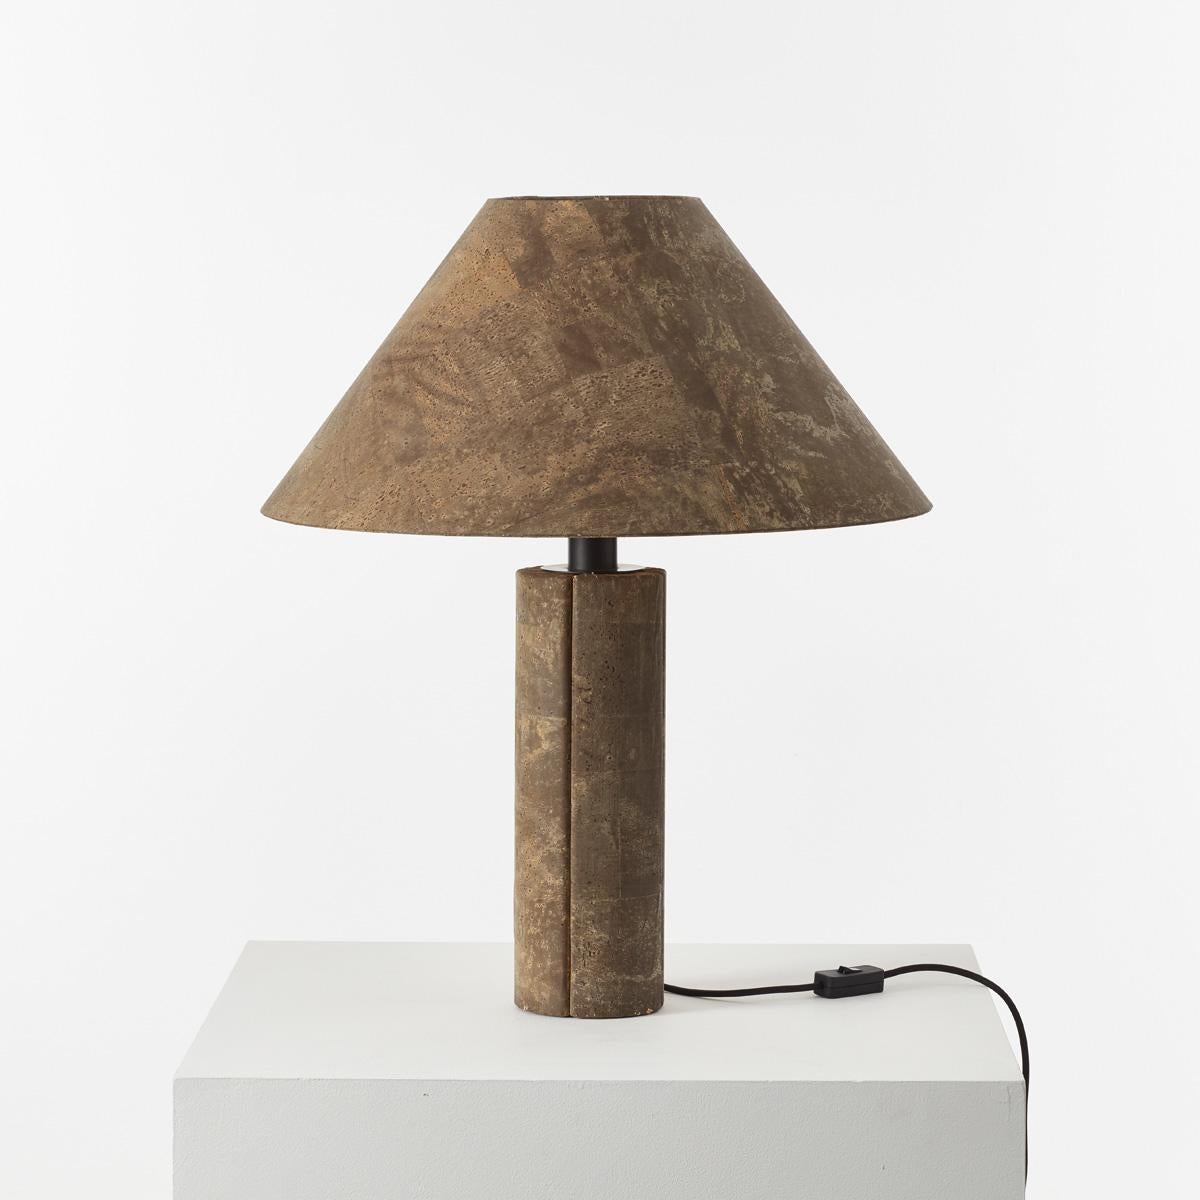 Postmoderne Lampe en liège Ingo Maurer pour Design M, Allemagne, 1974. Paire disponible.  en vente